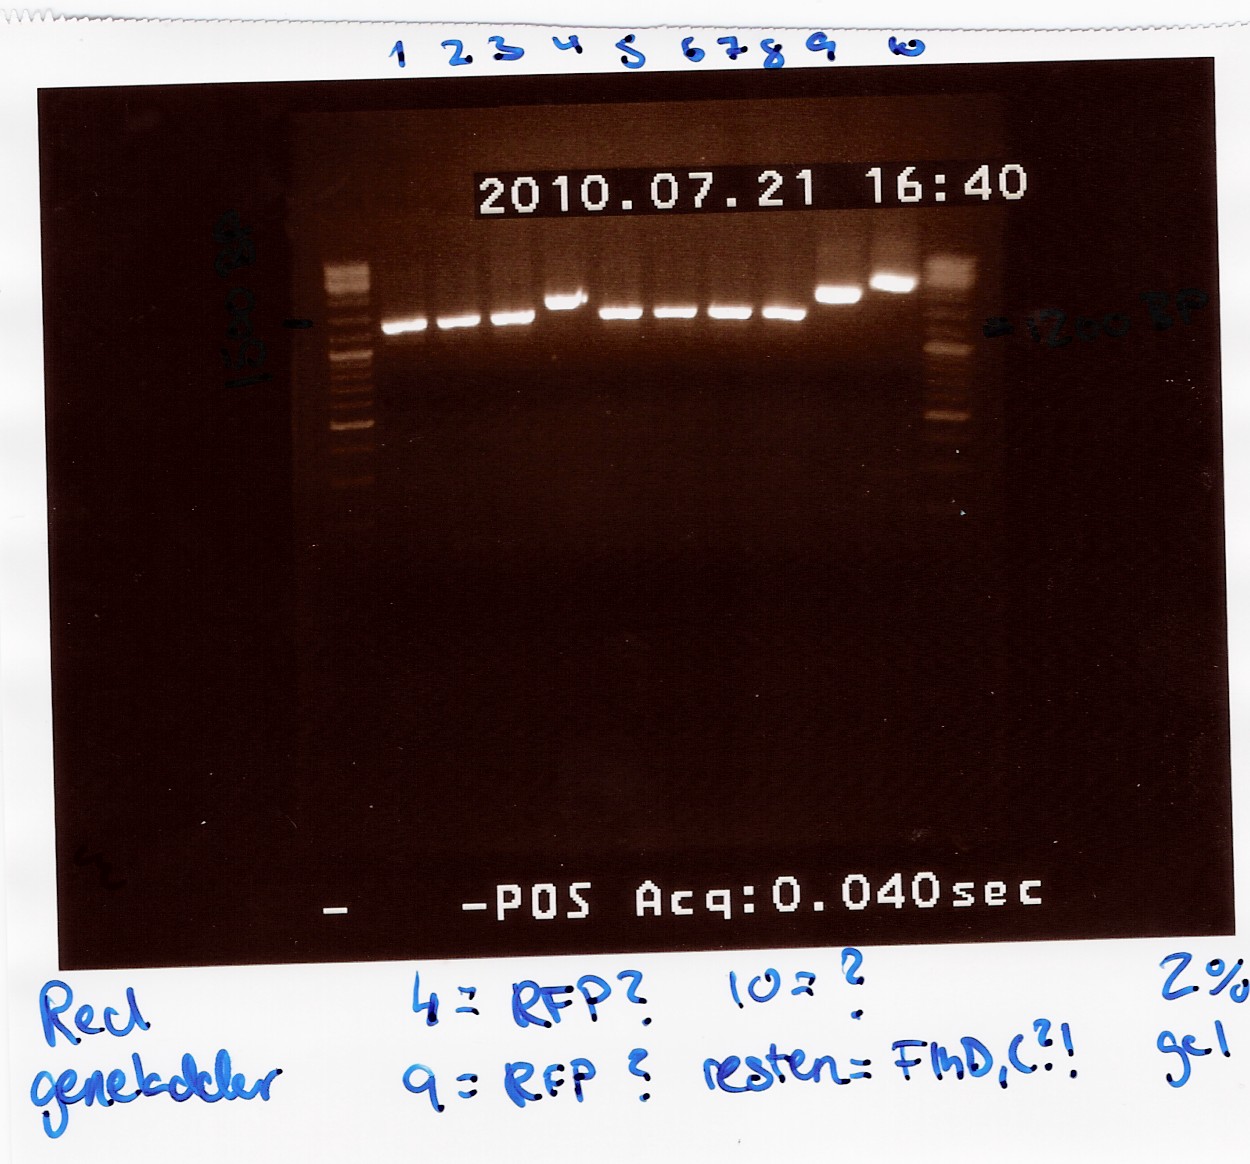 Team-SDU-Denmark-coloni PCR flhDC ligation.jpg